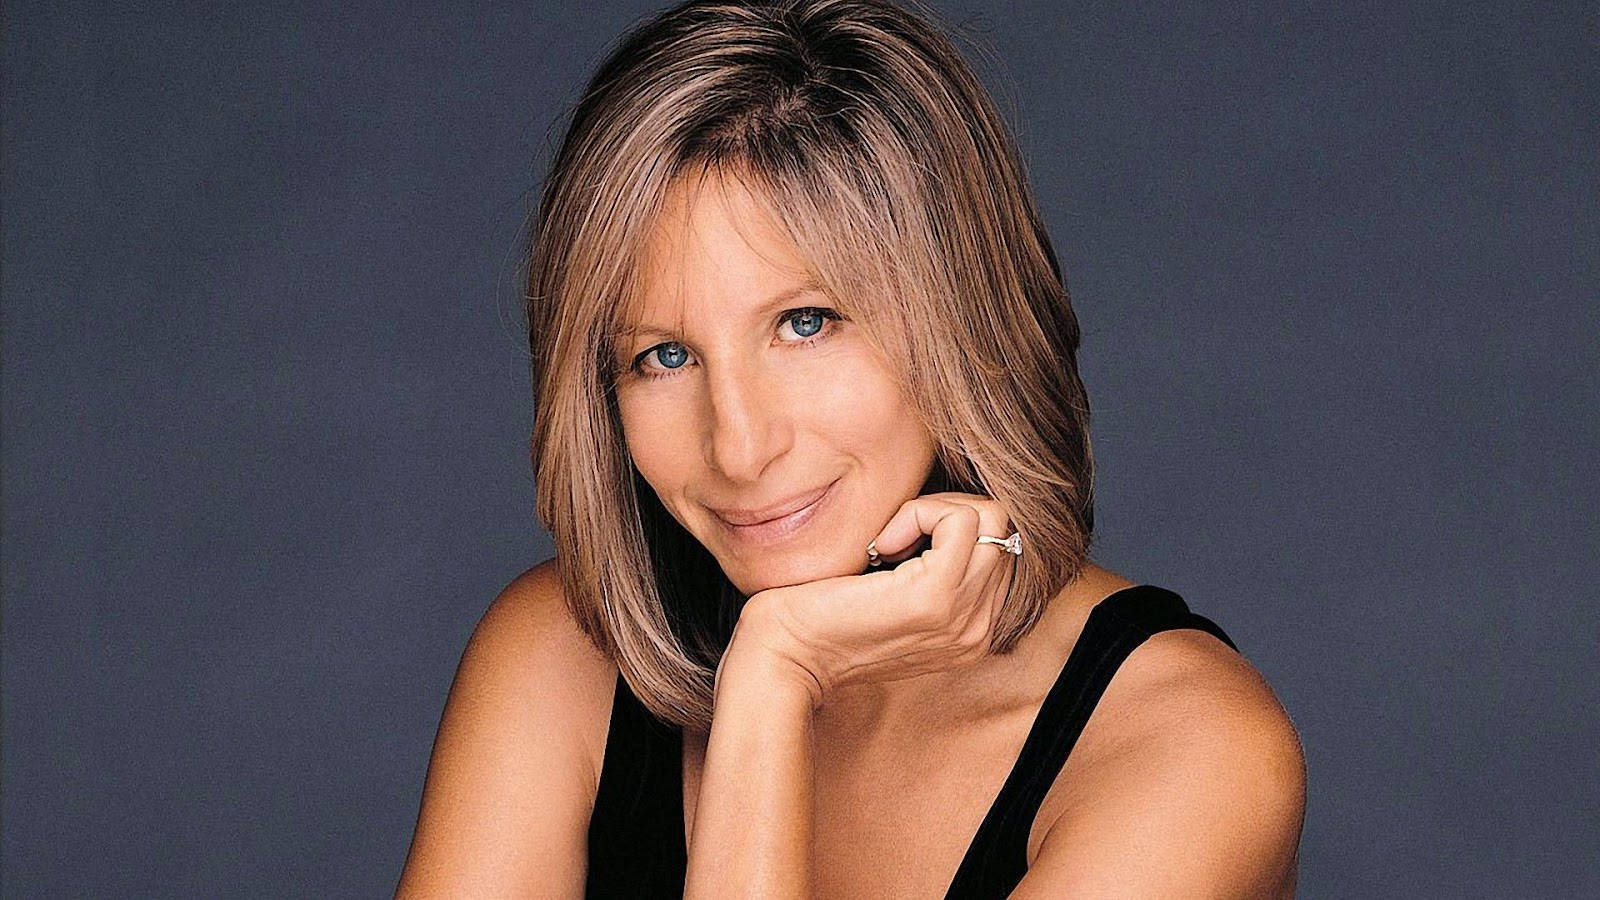 Barbra Streisand Simple Portrait By Firooz Zahedi Wallpaper